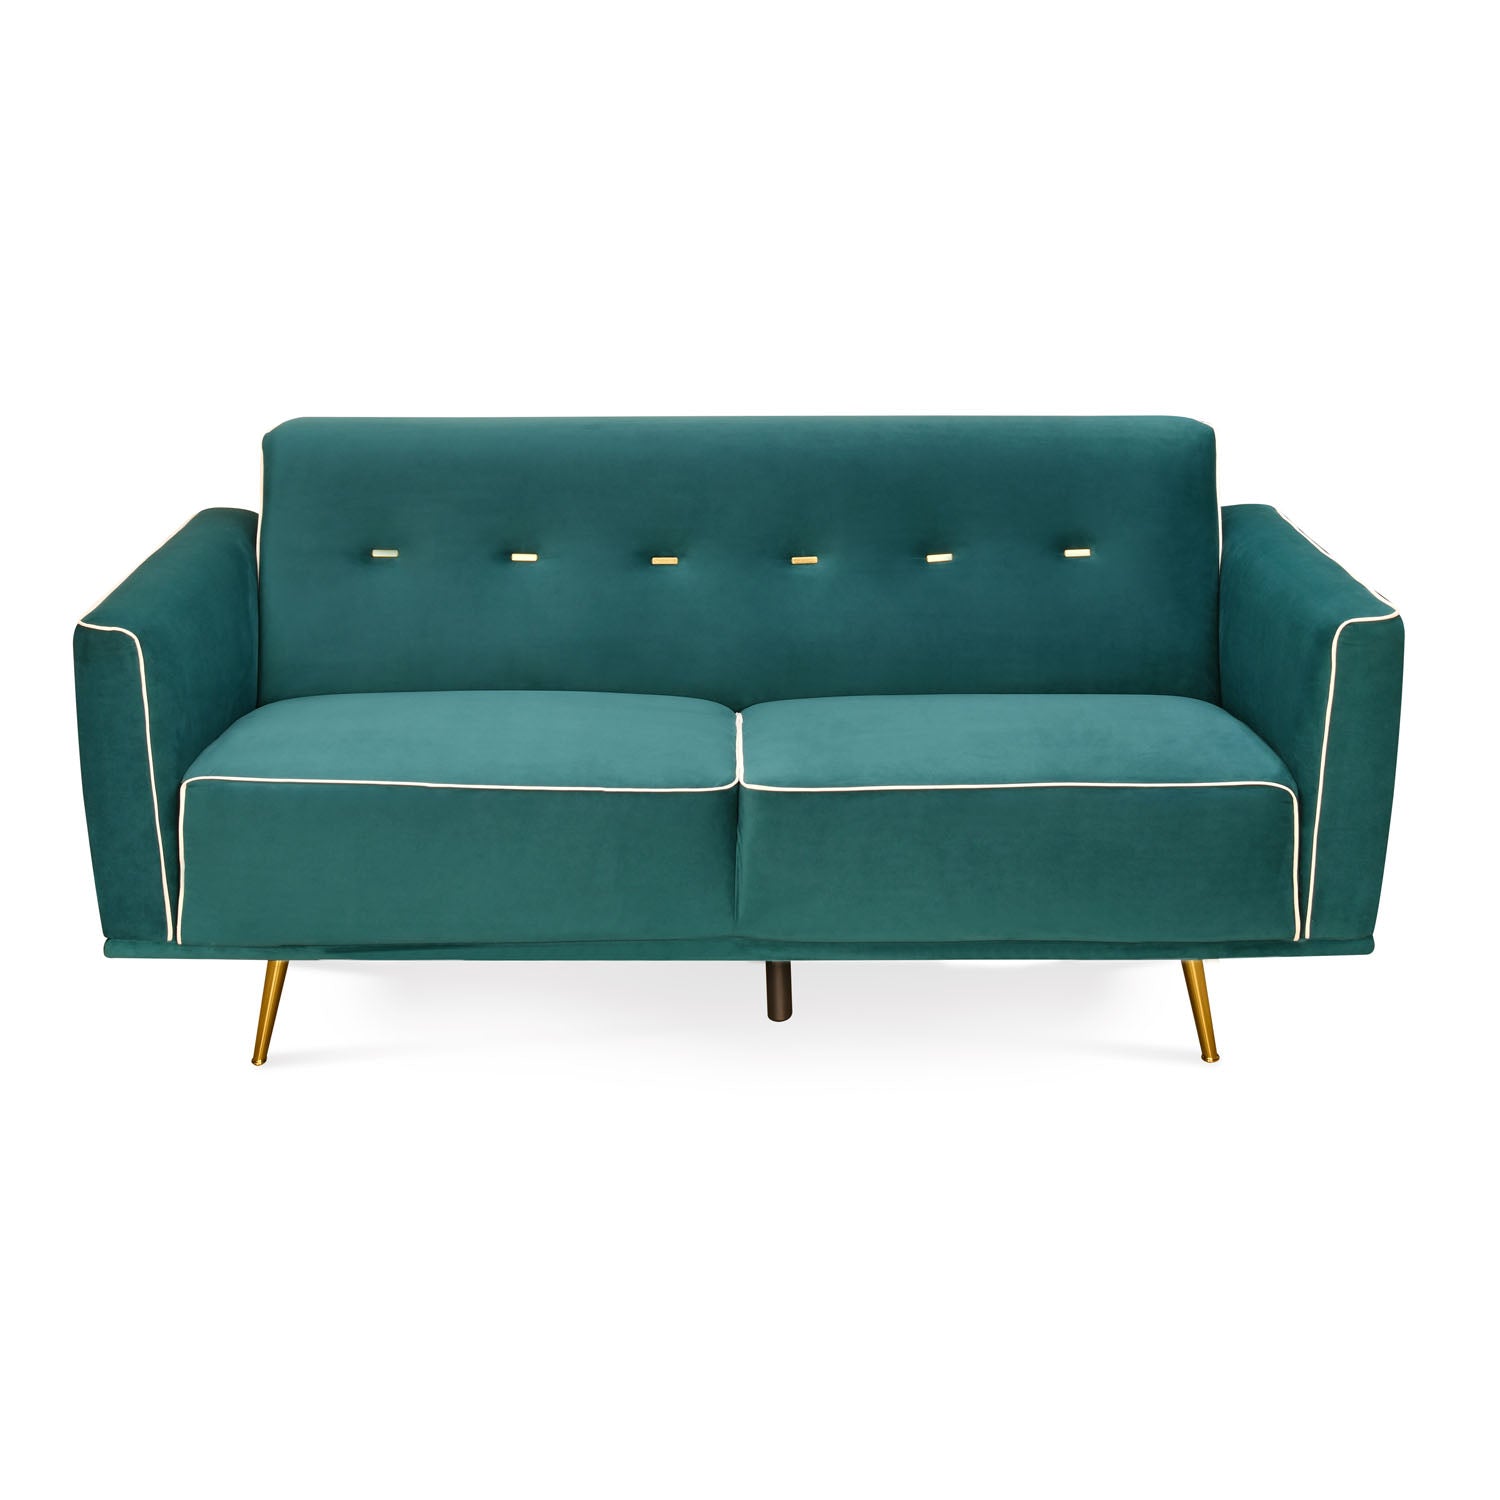 Kinsella 3 Seater Sofa (Teal Blue)